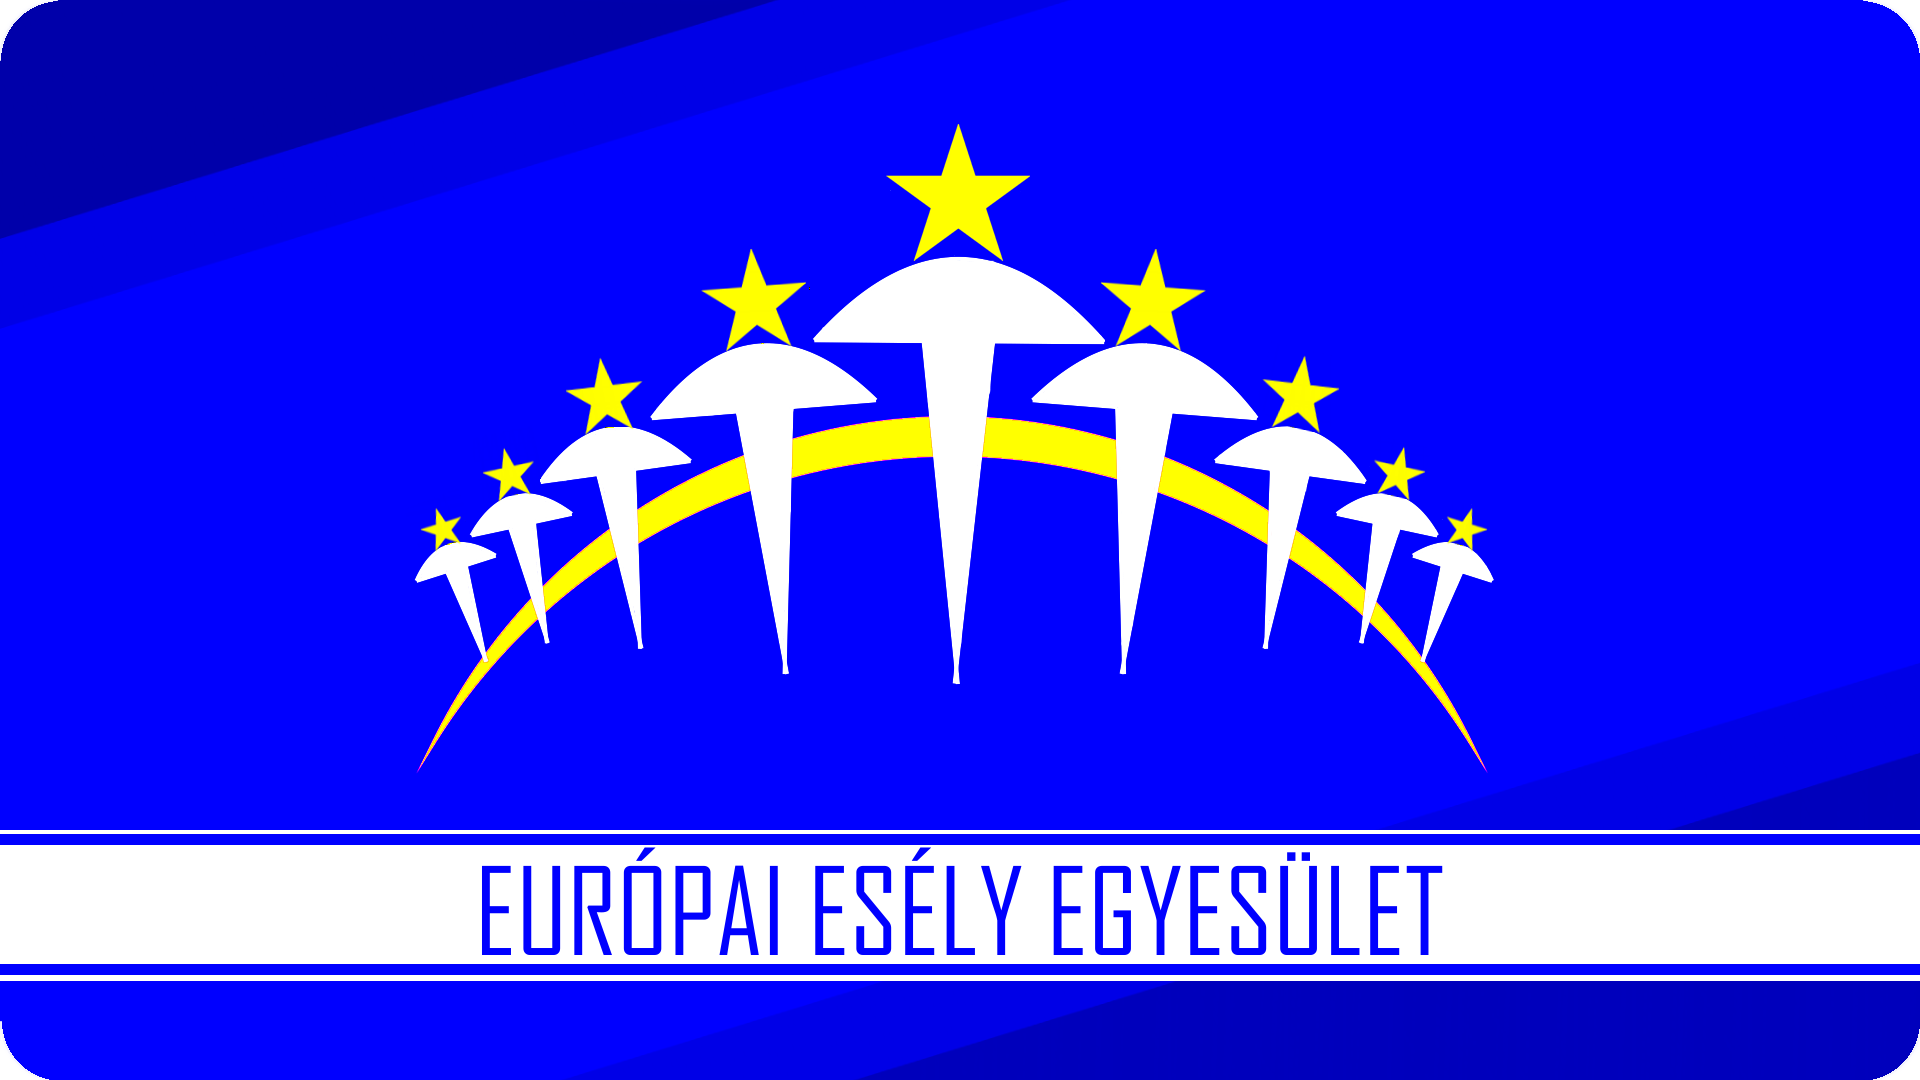 eurpai esly egyeslet_logo2